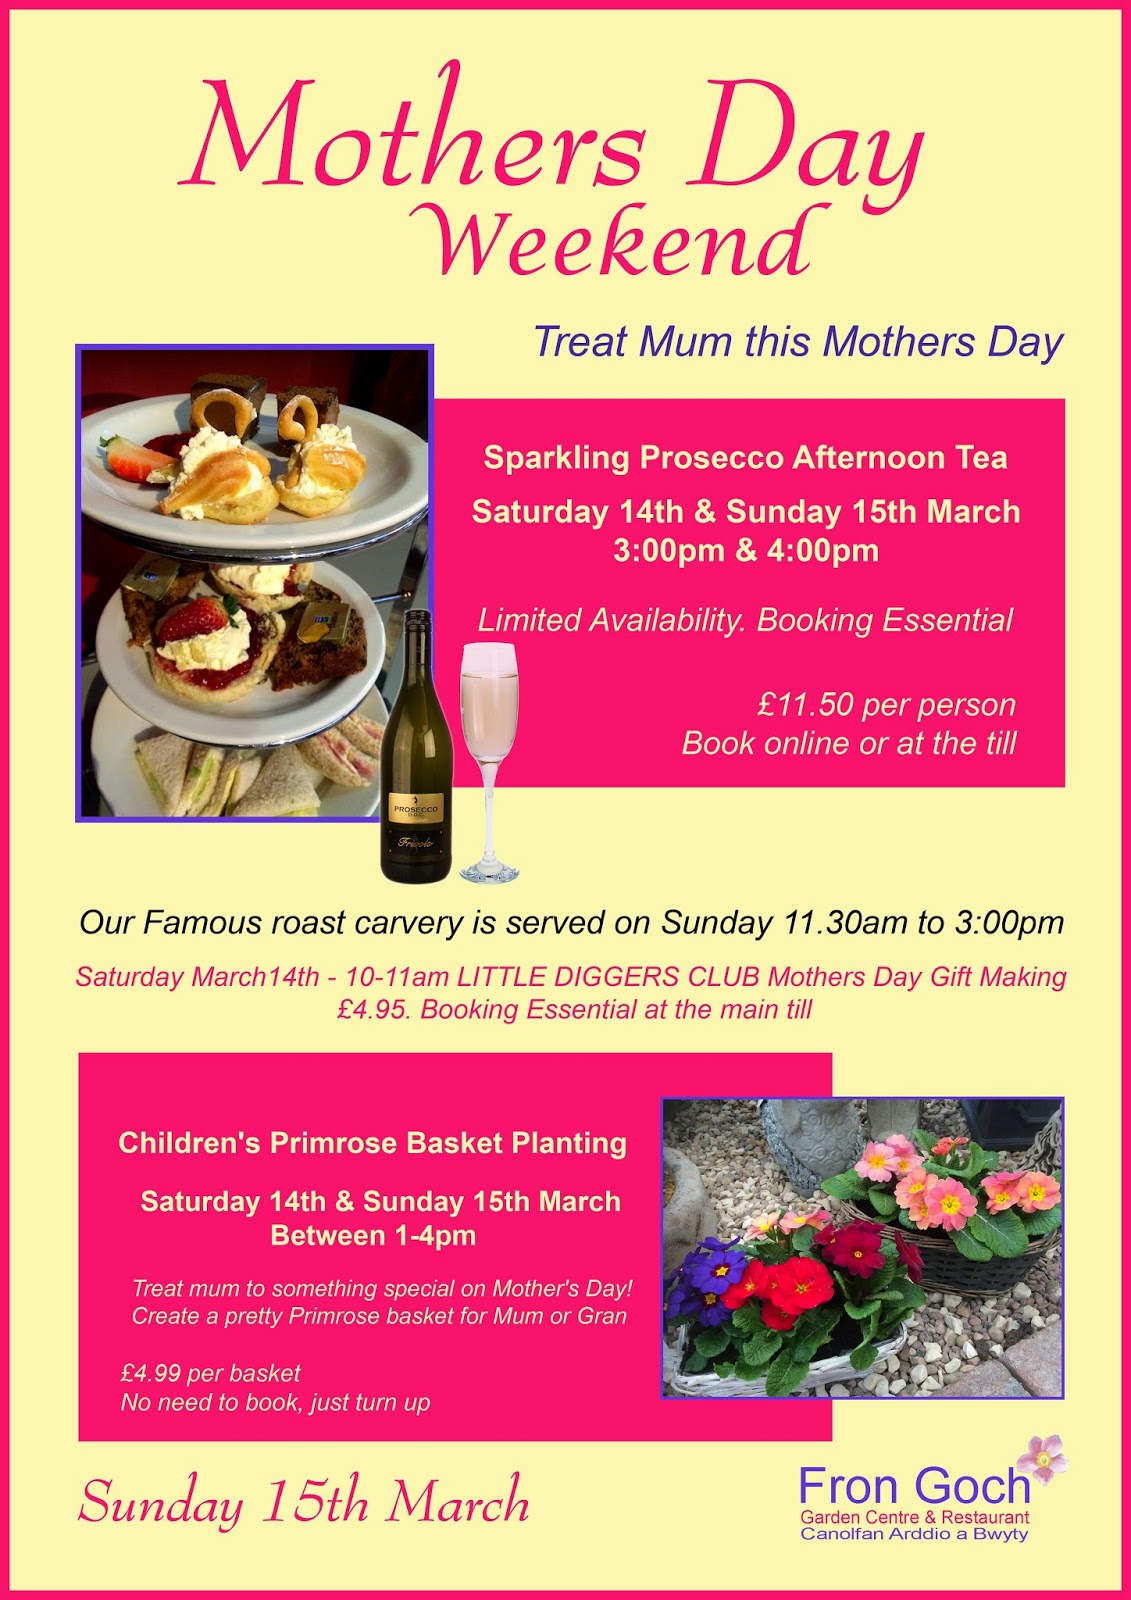 Fron Goch Garden Centre Mothers Day Weekend